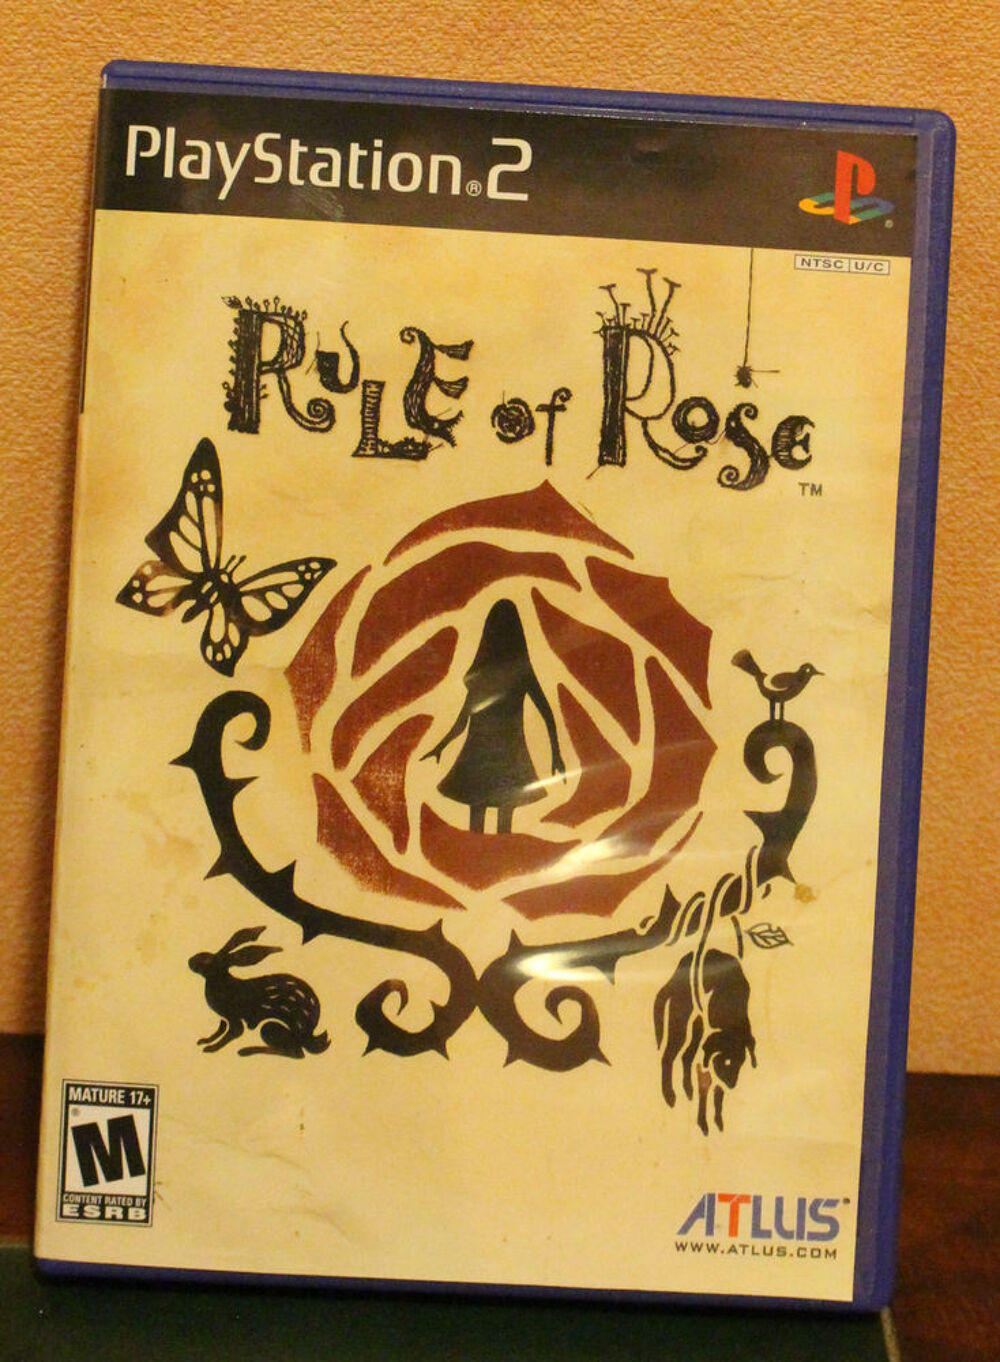 Rule of rose Playstation 2 Consoles et jeux vidos